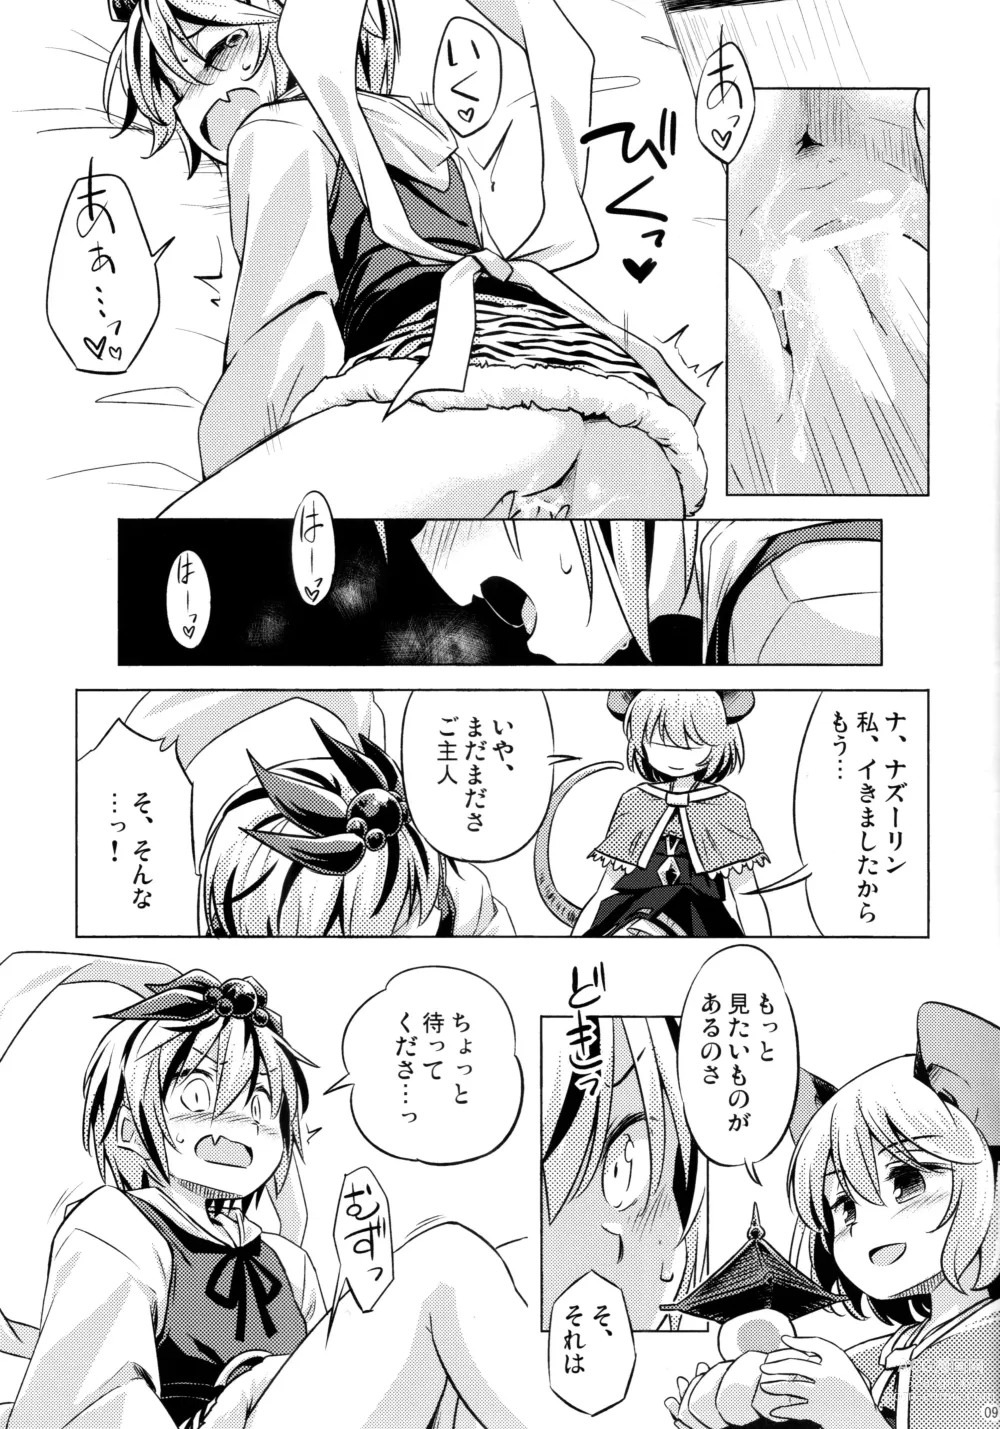 Page 8 of doujinshi Onazrin to Senzurii Tiger